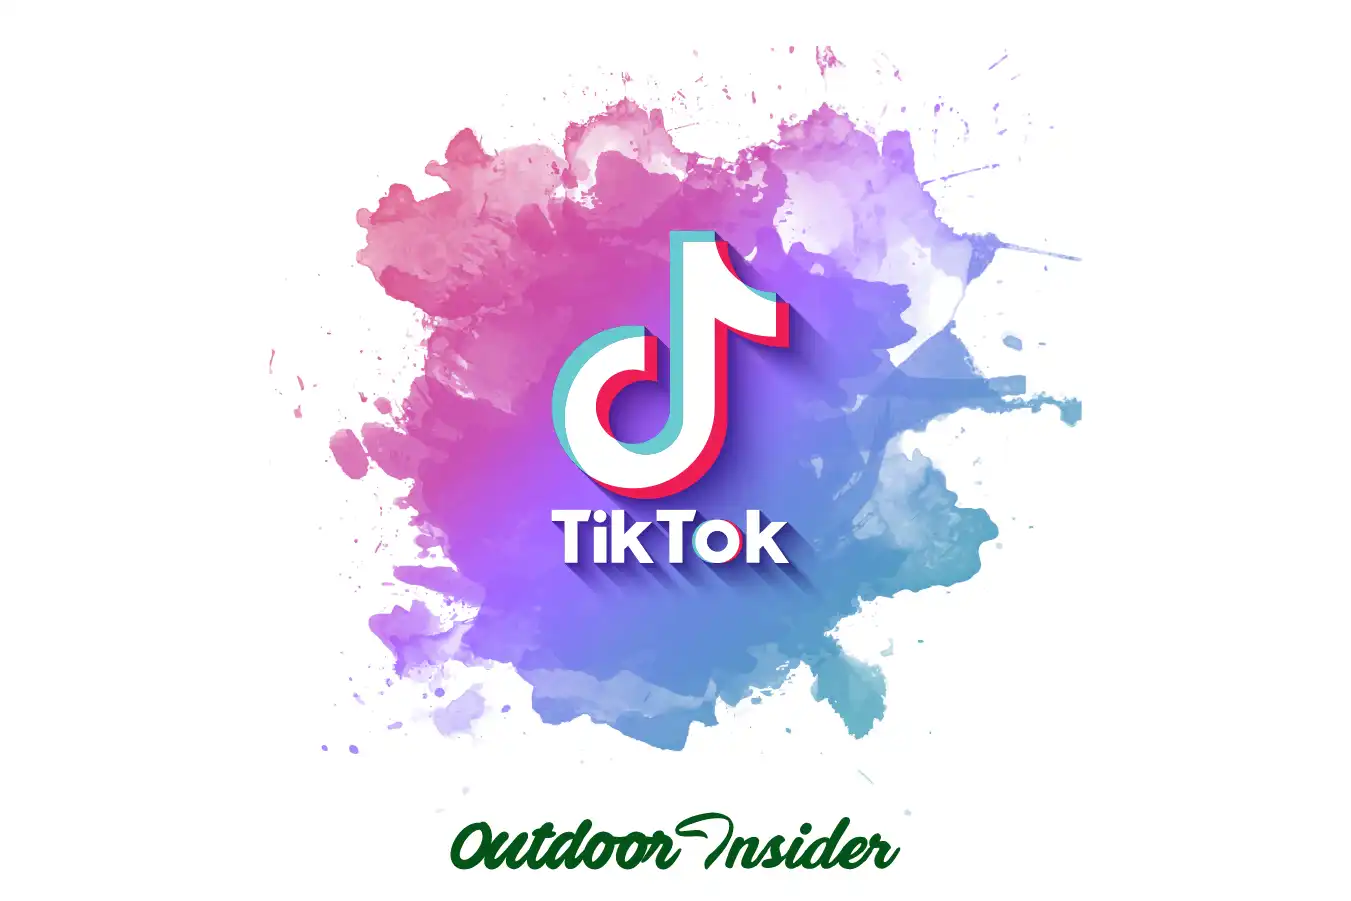 What Does Camping Mean on TikTok? Unlocking TikTok